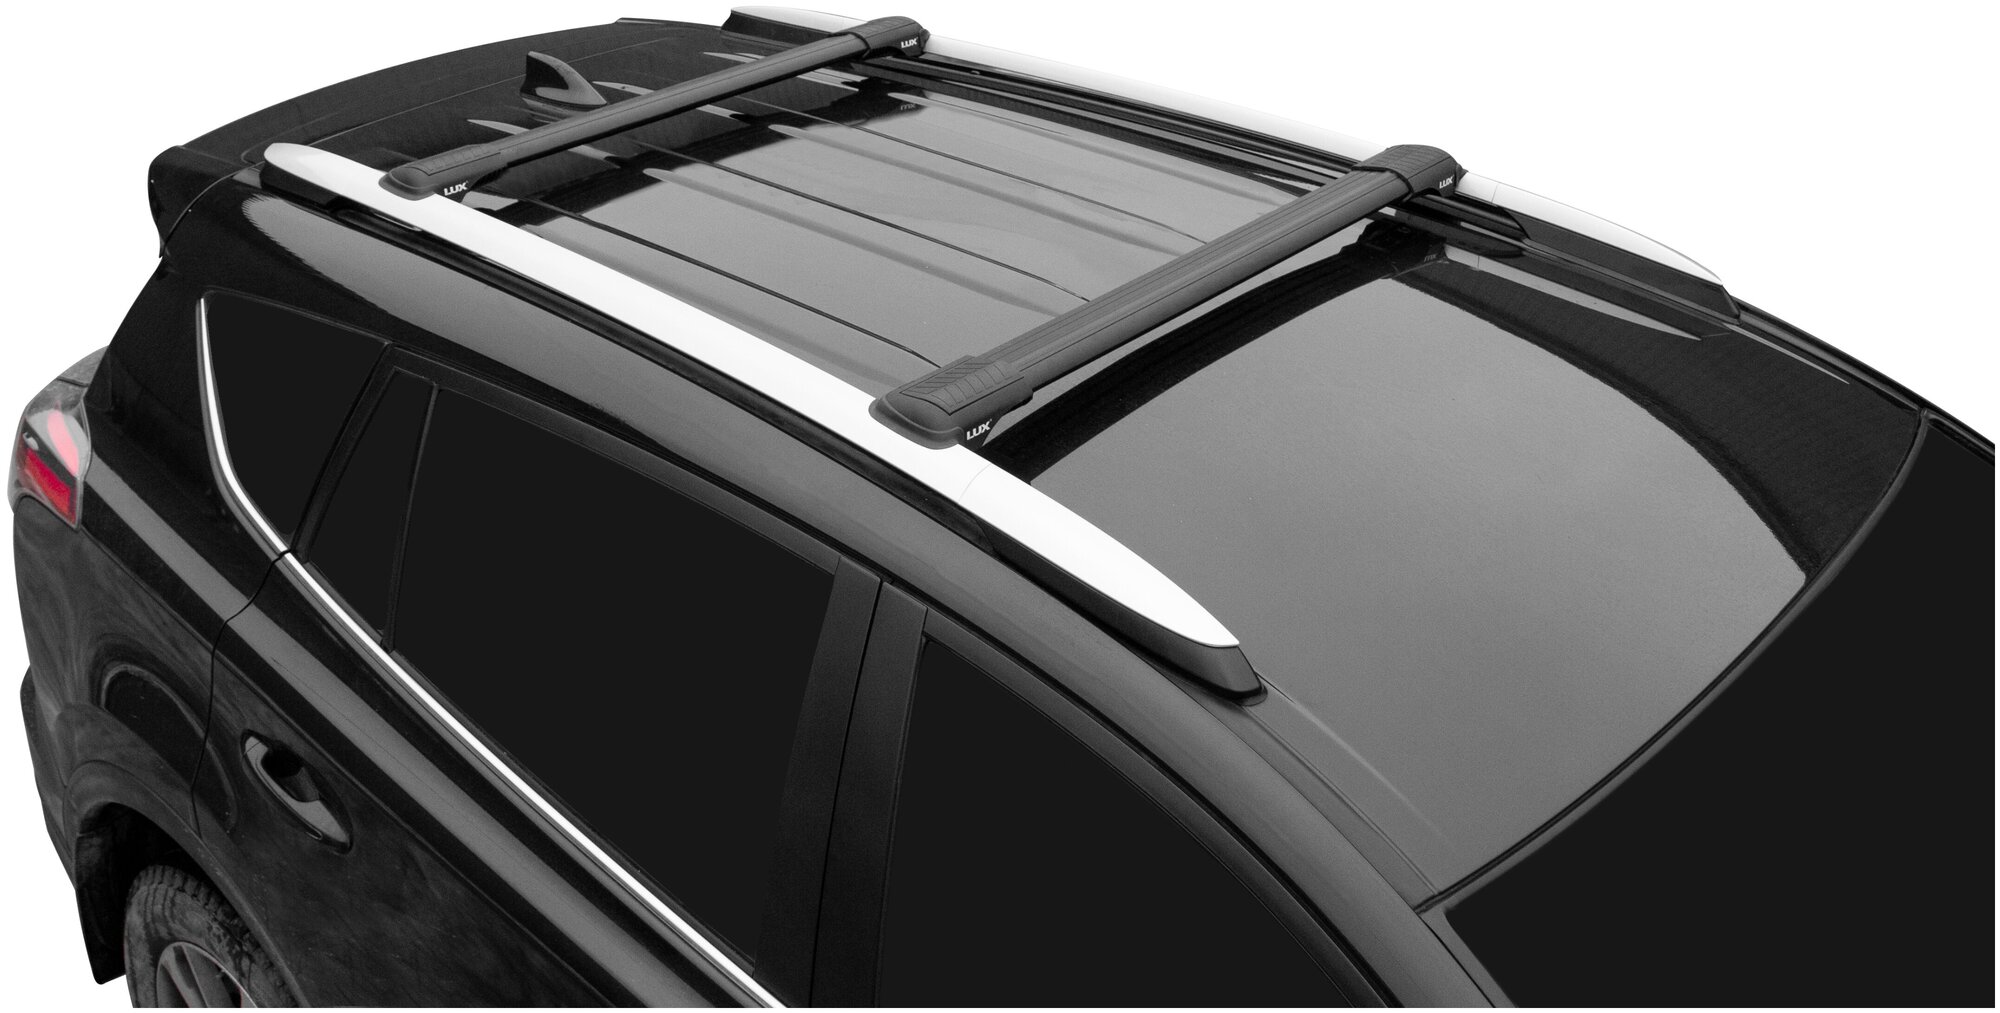 Багажная система LUX хантер L43-B черная для автомобилей с рейлингами (Lux 791859)